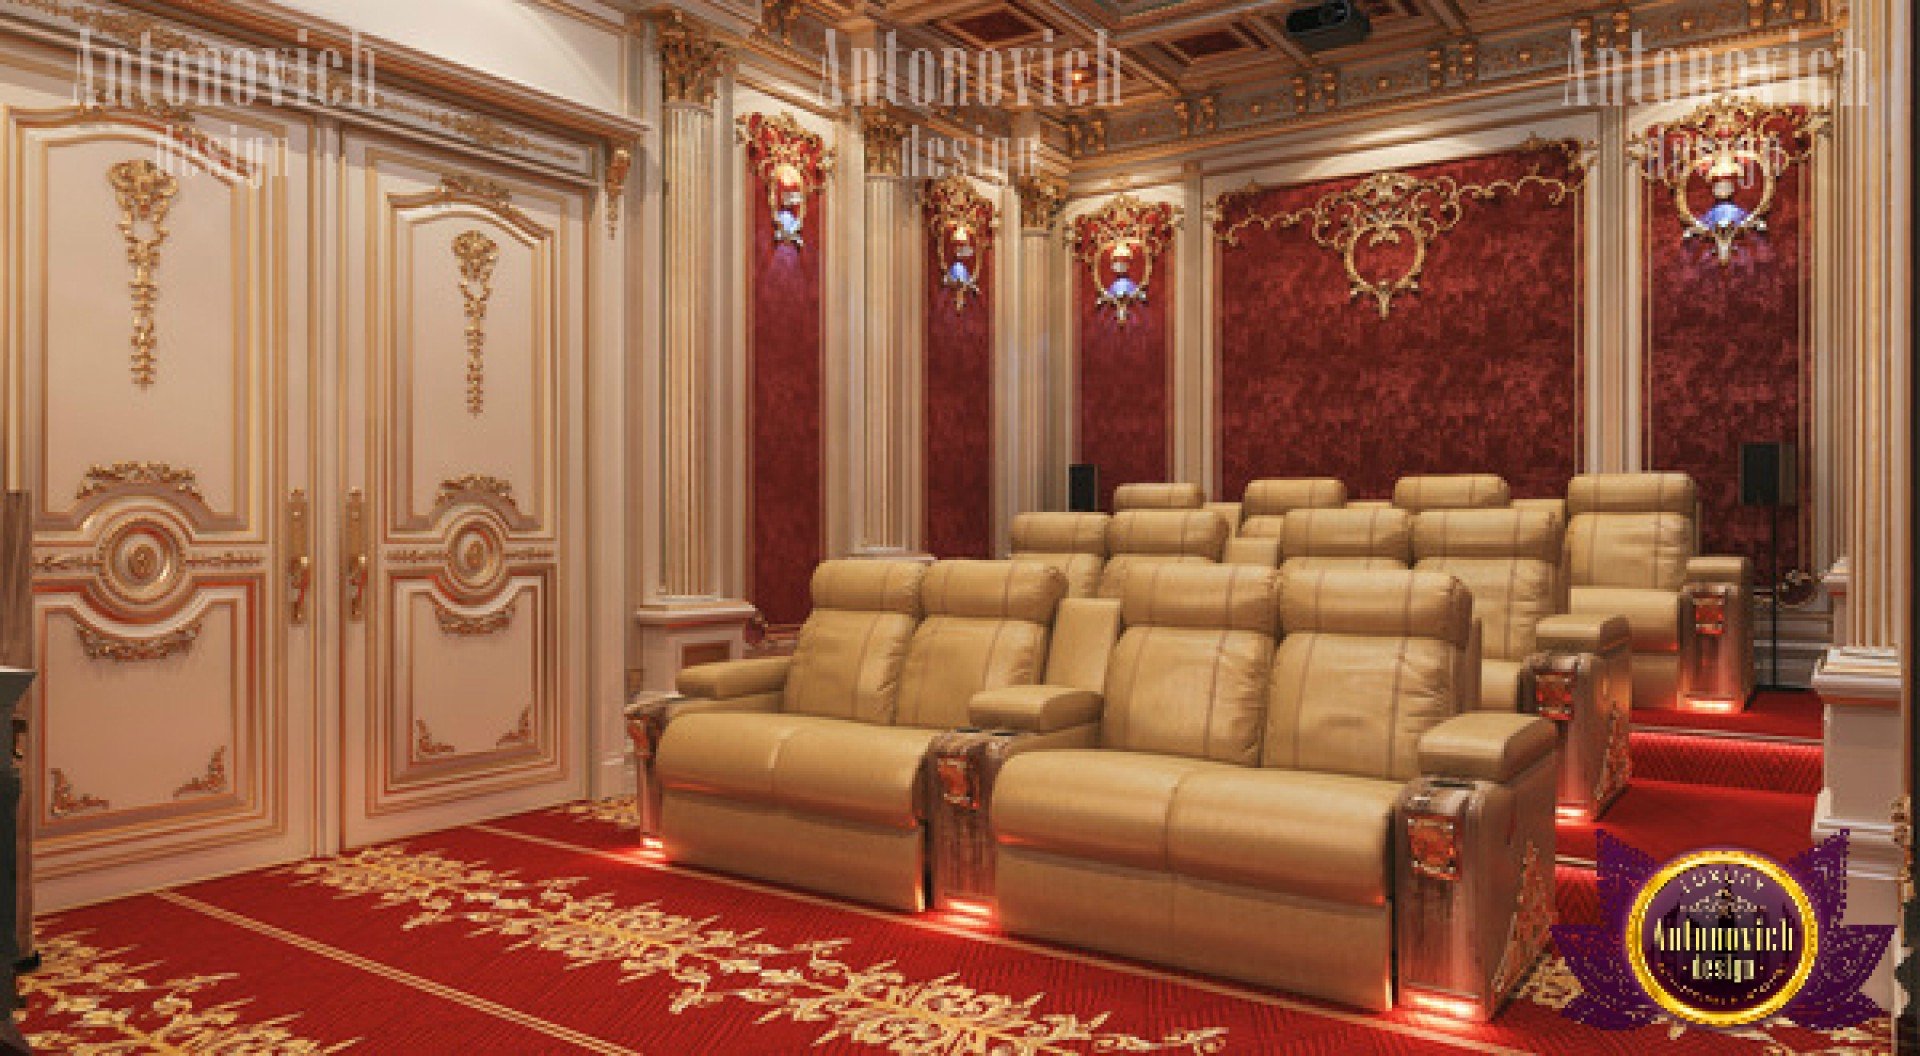 Elegant interior design elements for a stunning Nigerian home theater